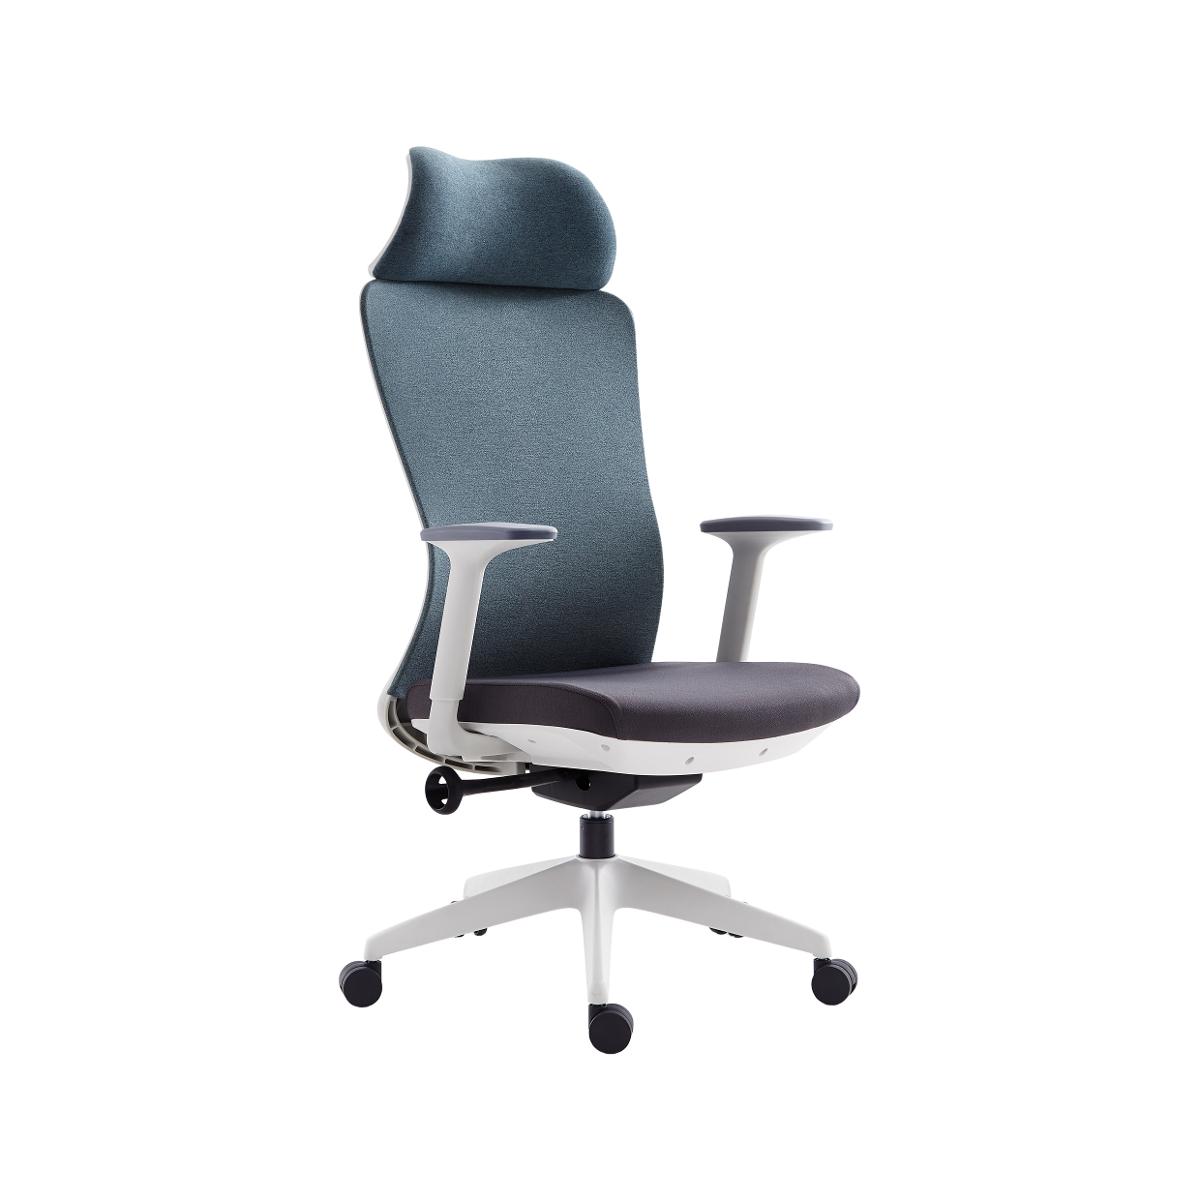 Super Chair เก้าอี้ผู้บริหาร รุ่น M123-2  H White